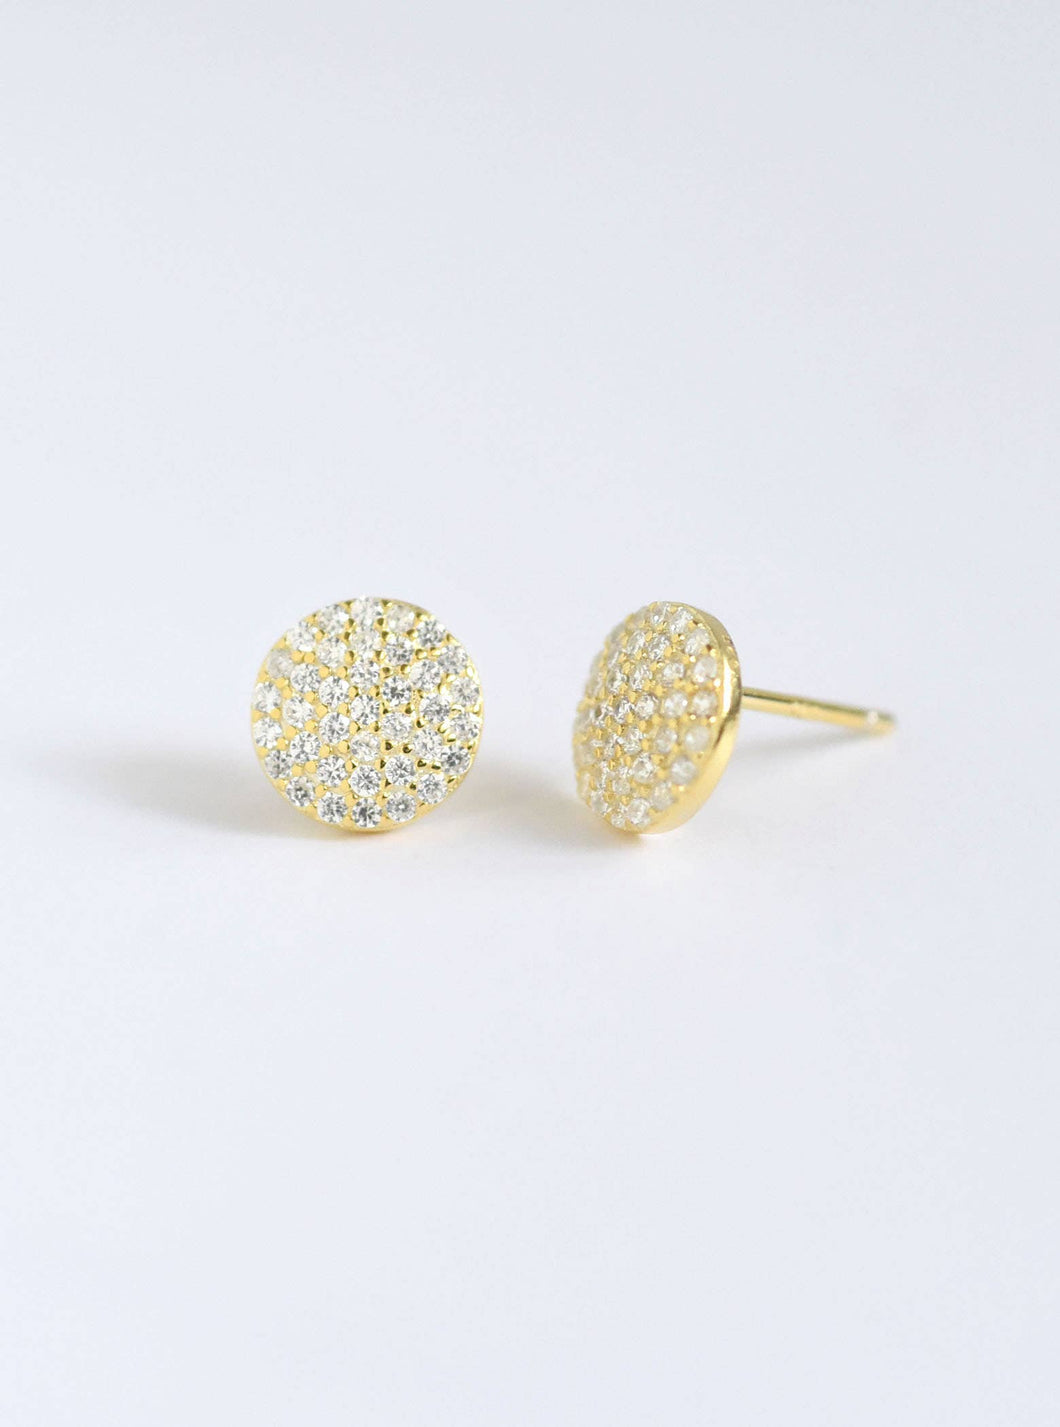 gold stud earrings with diamonds